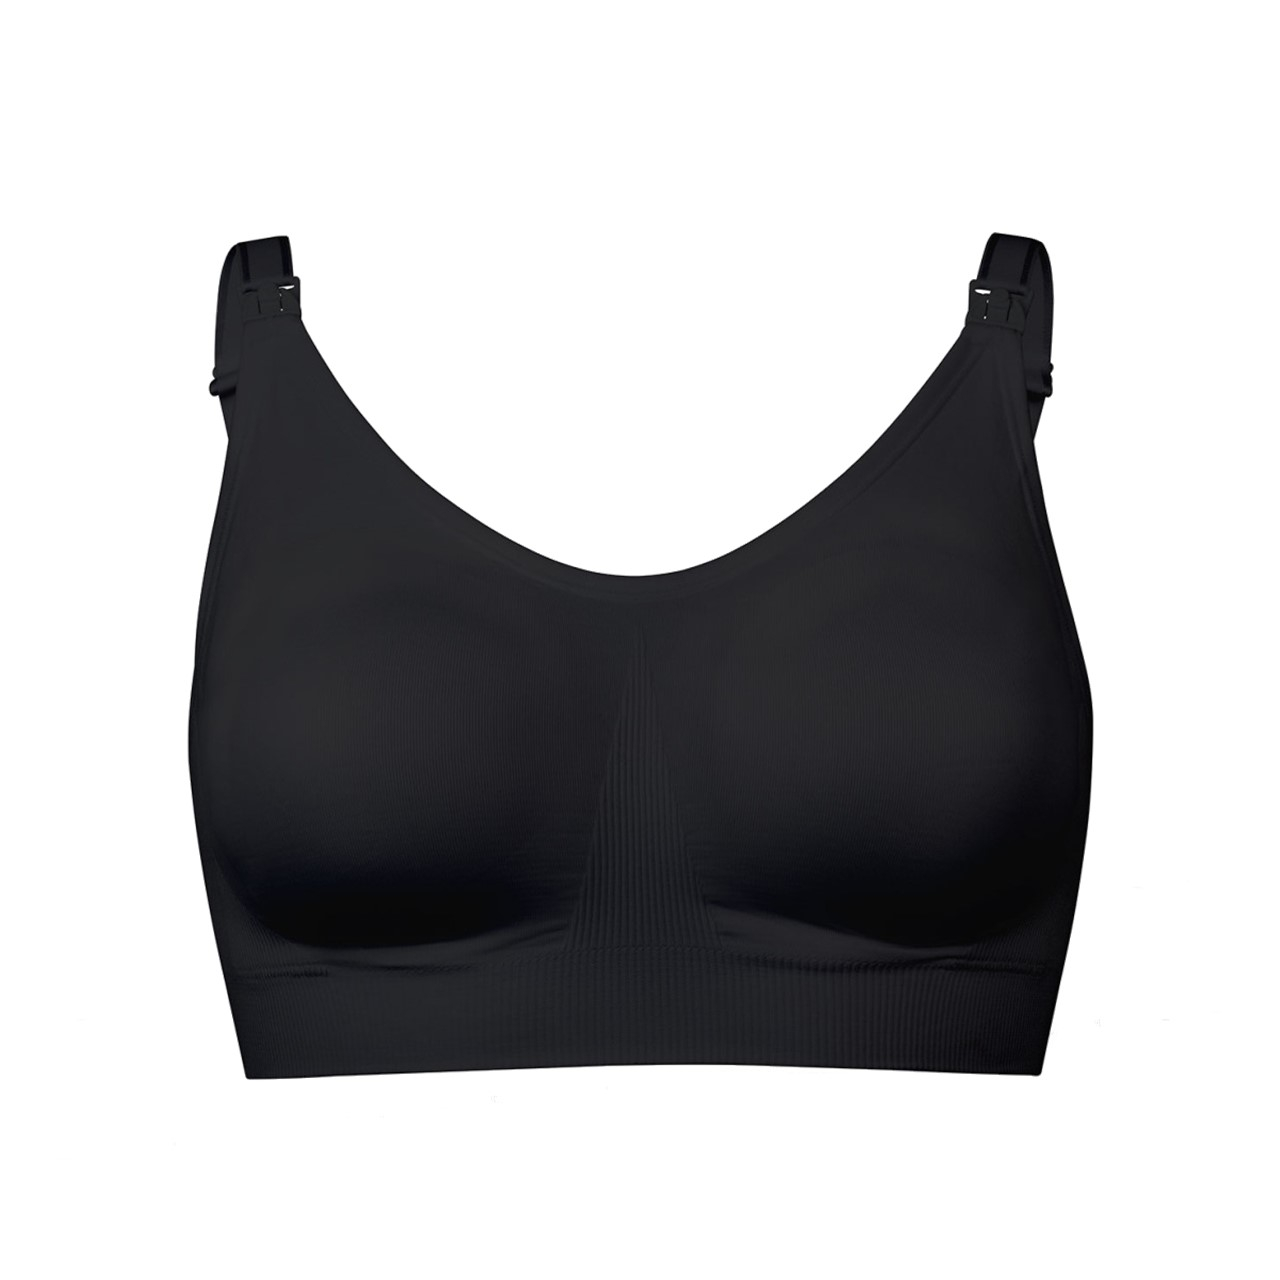 https://static.beautytocare.com/media/catalog/product/m/e/medela-ultimate-bodyfit-bra-black-extra-large-size-x1.jpg